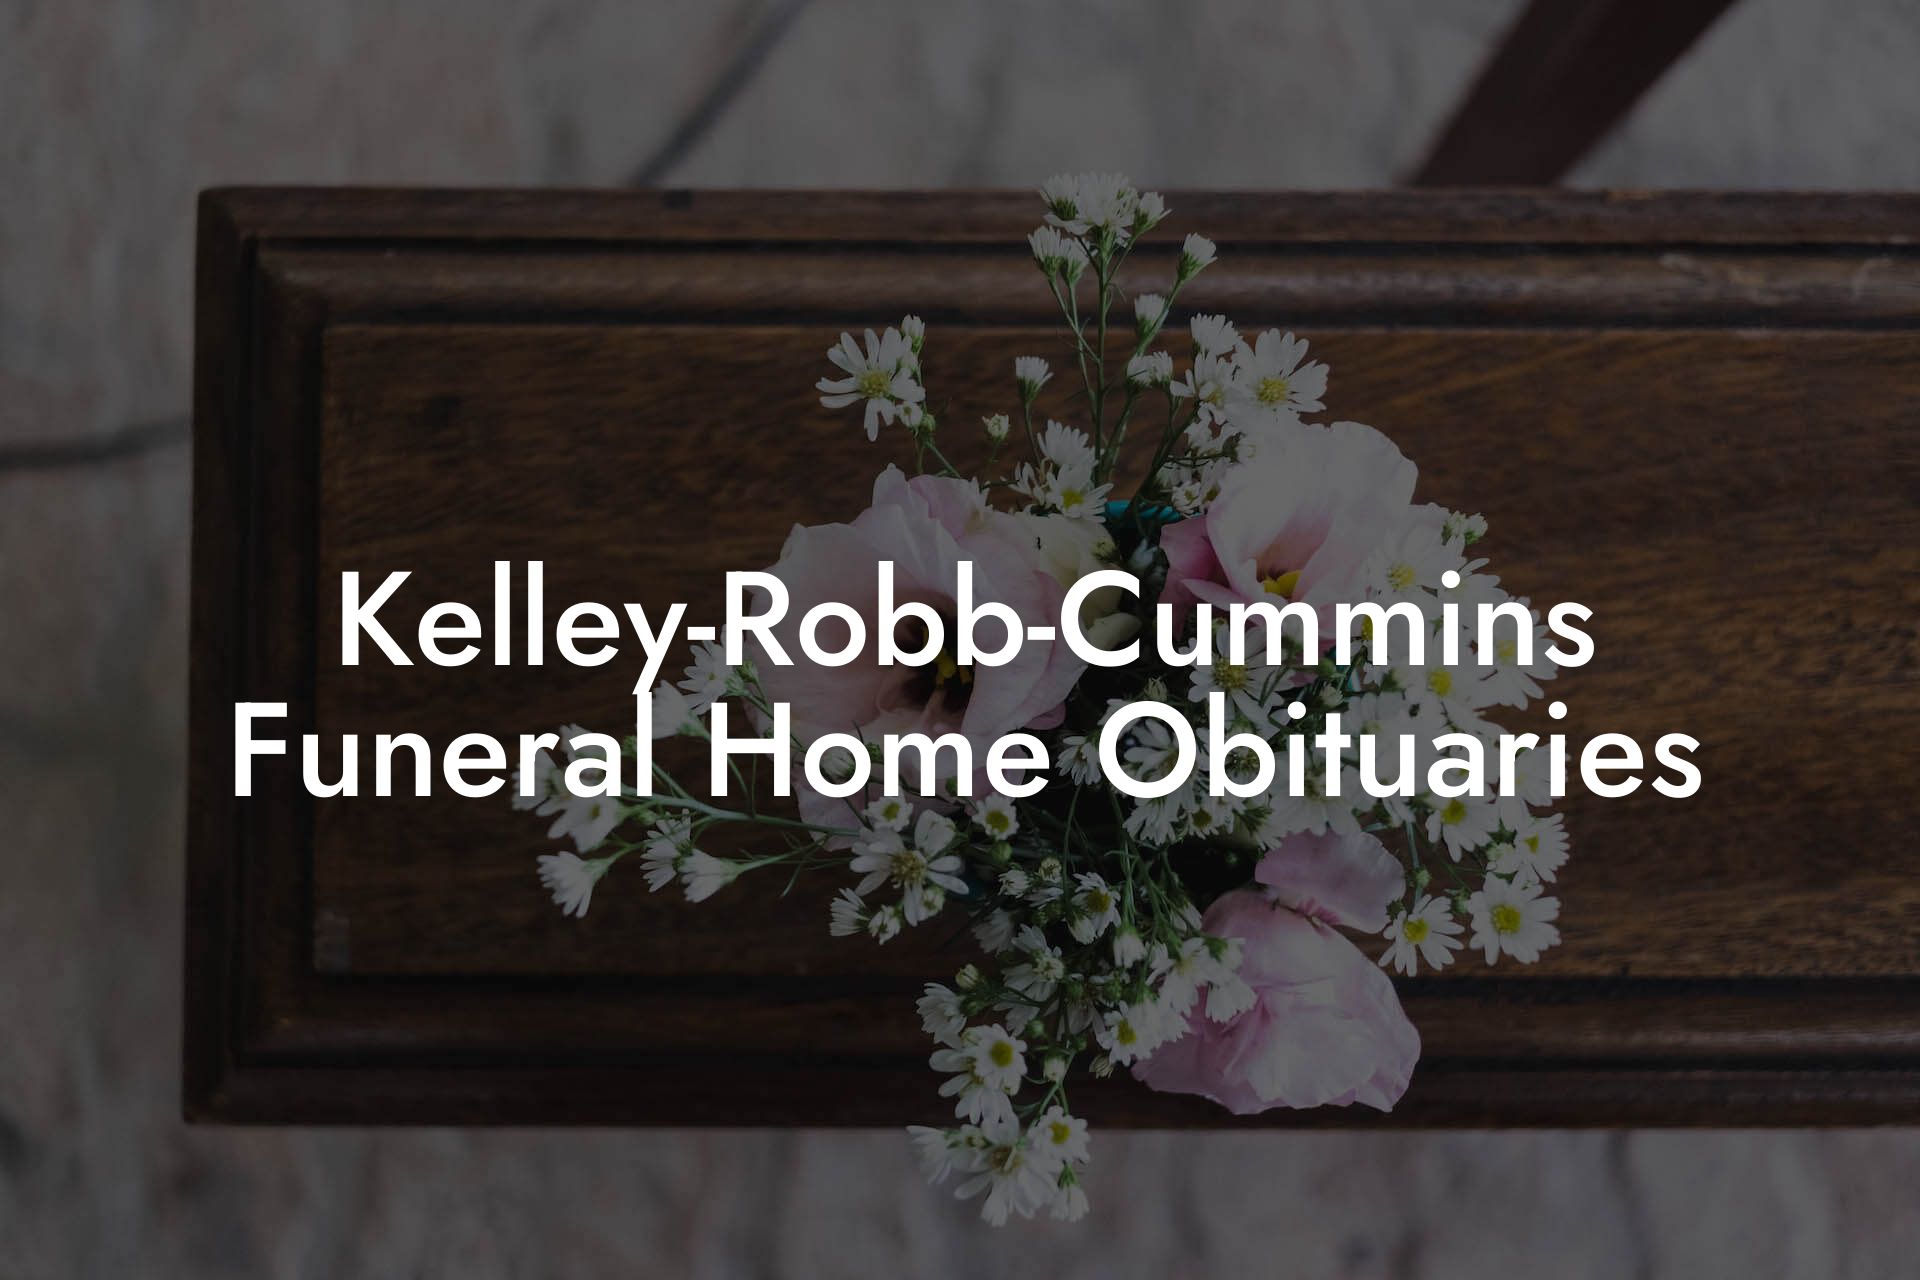 Kelley-Robb-Cummins Funeral Home Obituaries